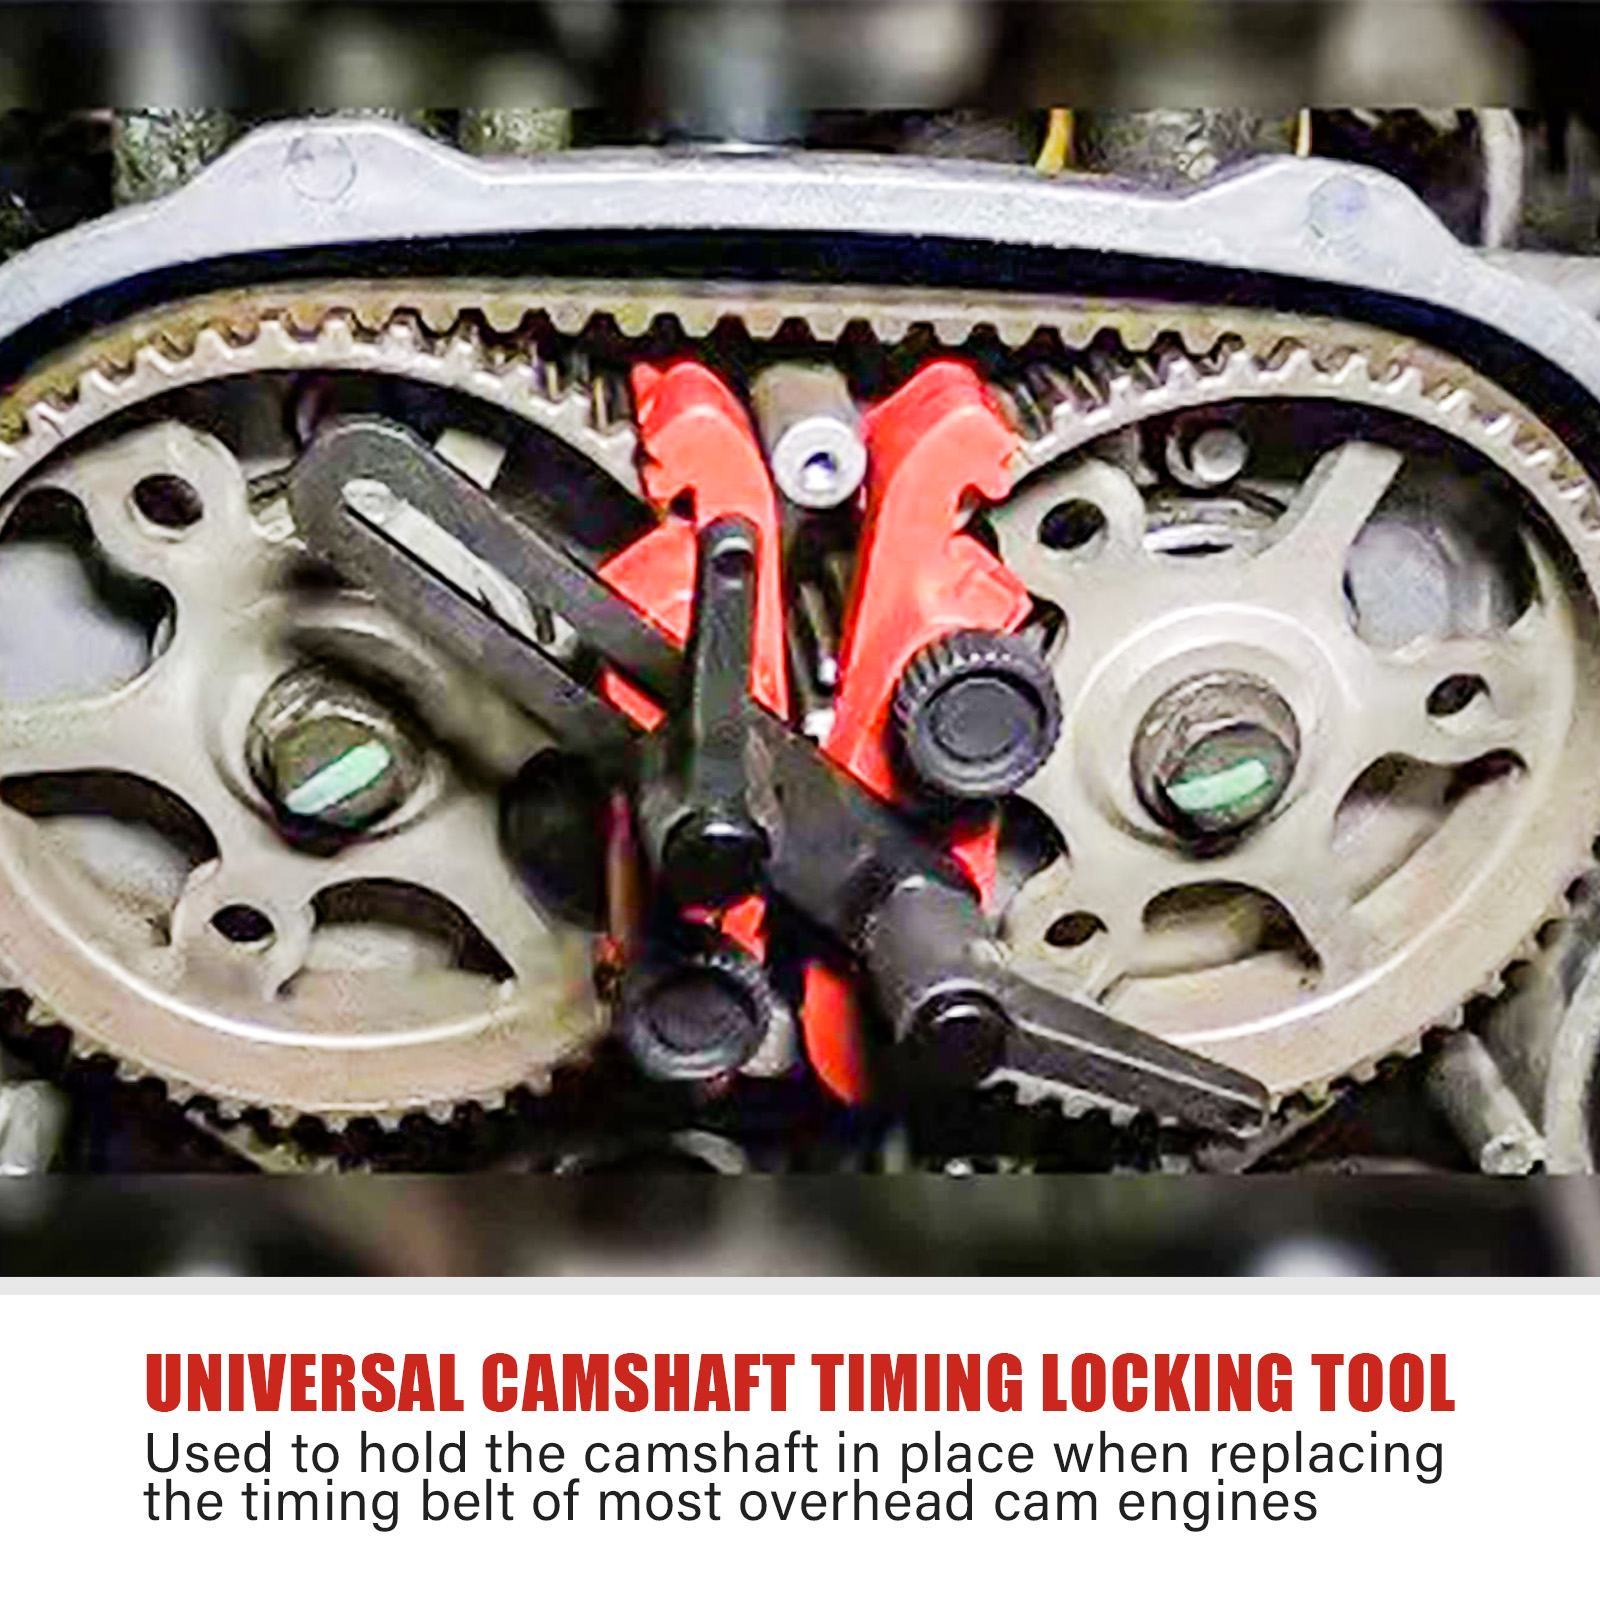 5 Pcs Universal Cam Camshaft Lock Holder Car Engine Cam Timing Locking  Retainer Timing Belt Fix Changer Cam Automotive Tool Set